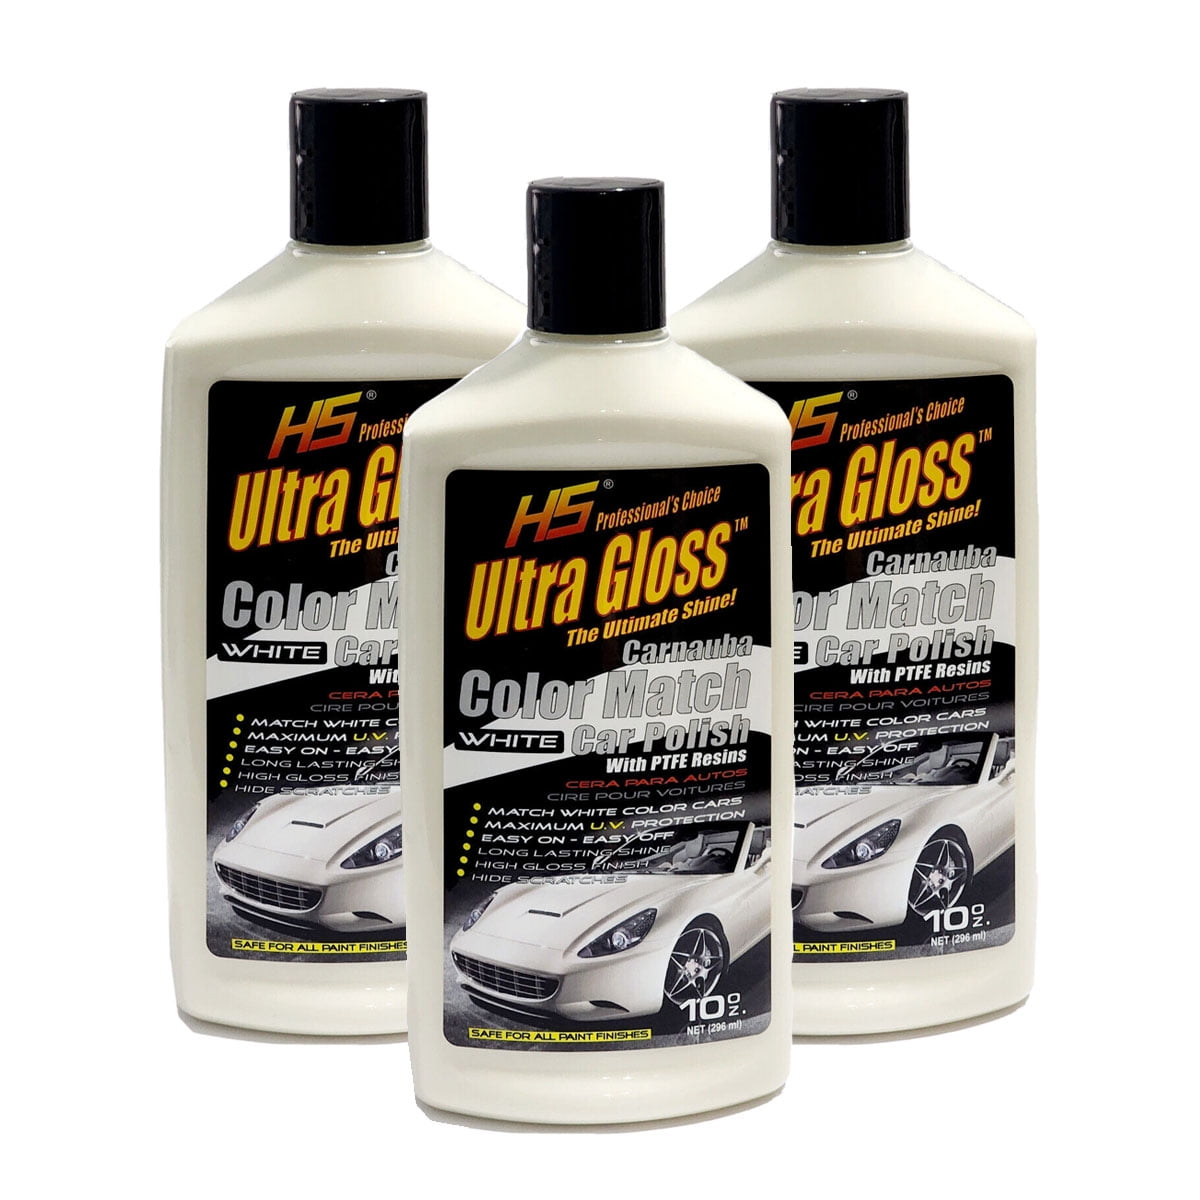 UCS It Just Works! Ultra Gloss Carnauba Car Wax Pre-Softened Formula 10 oz Carnauba Wax Car Polish for Car Detailing to Shine & Protect – Car